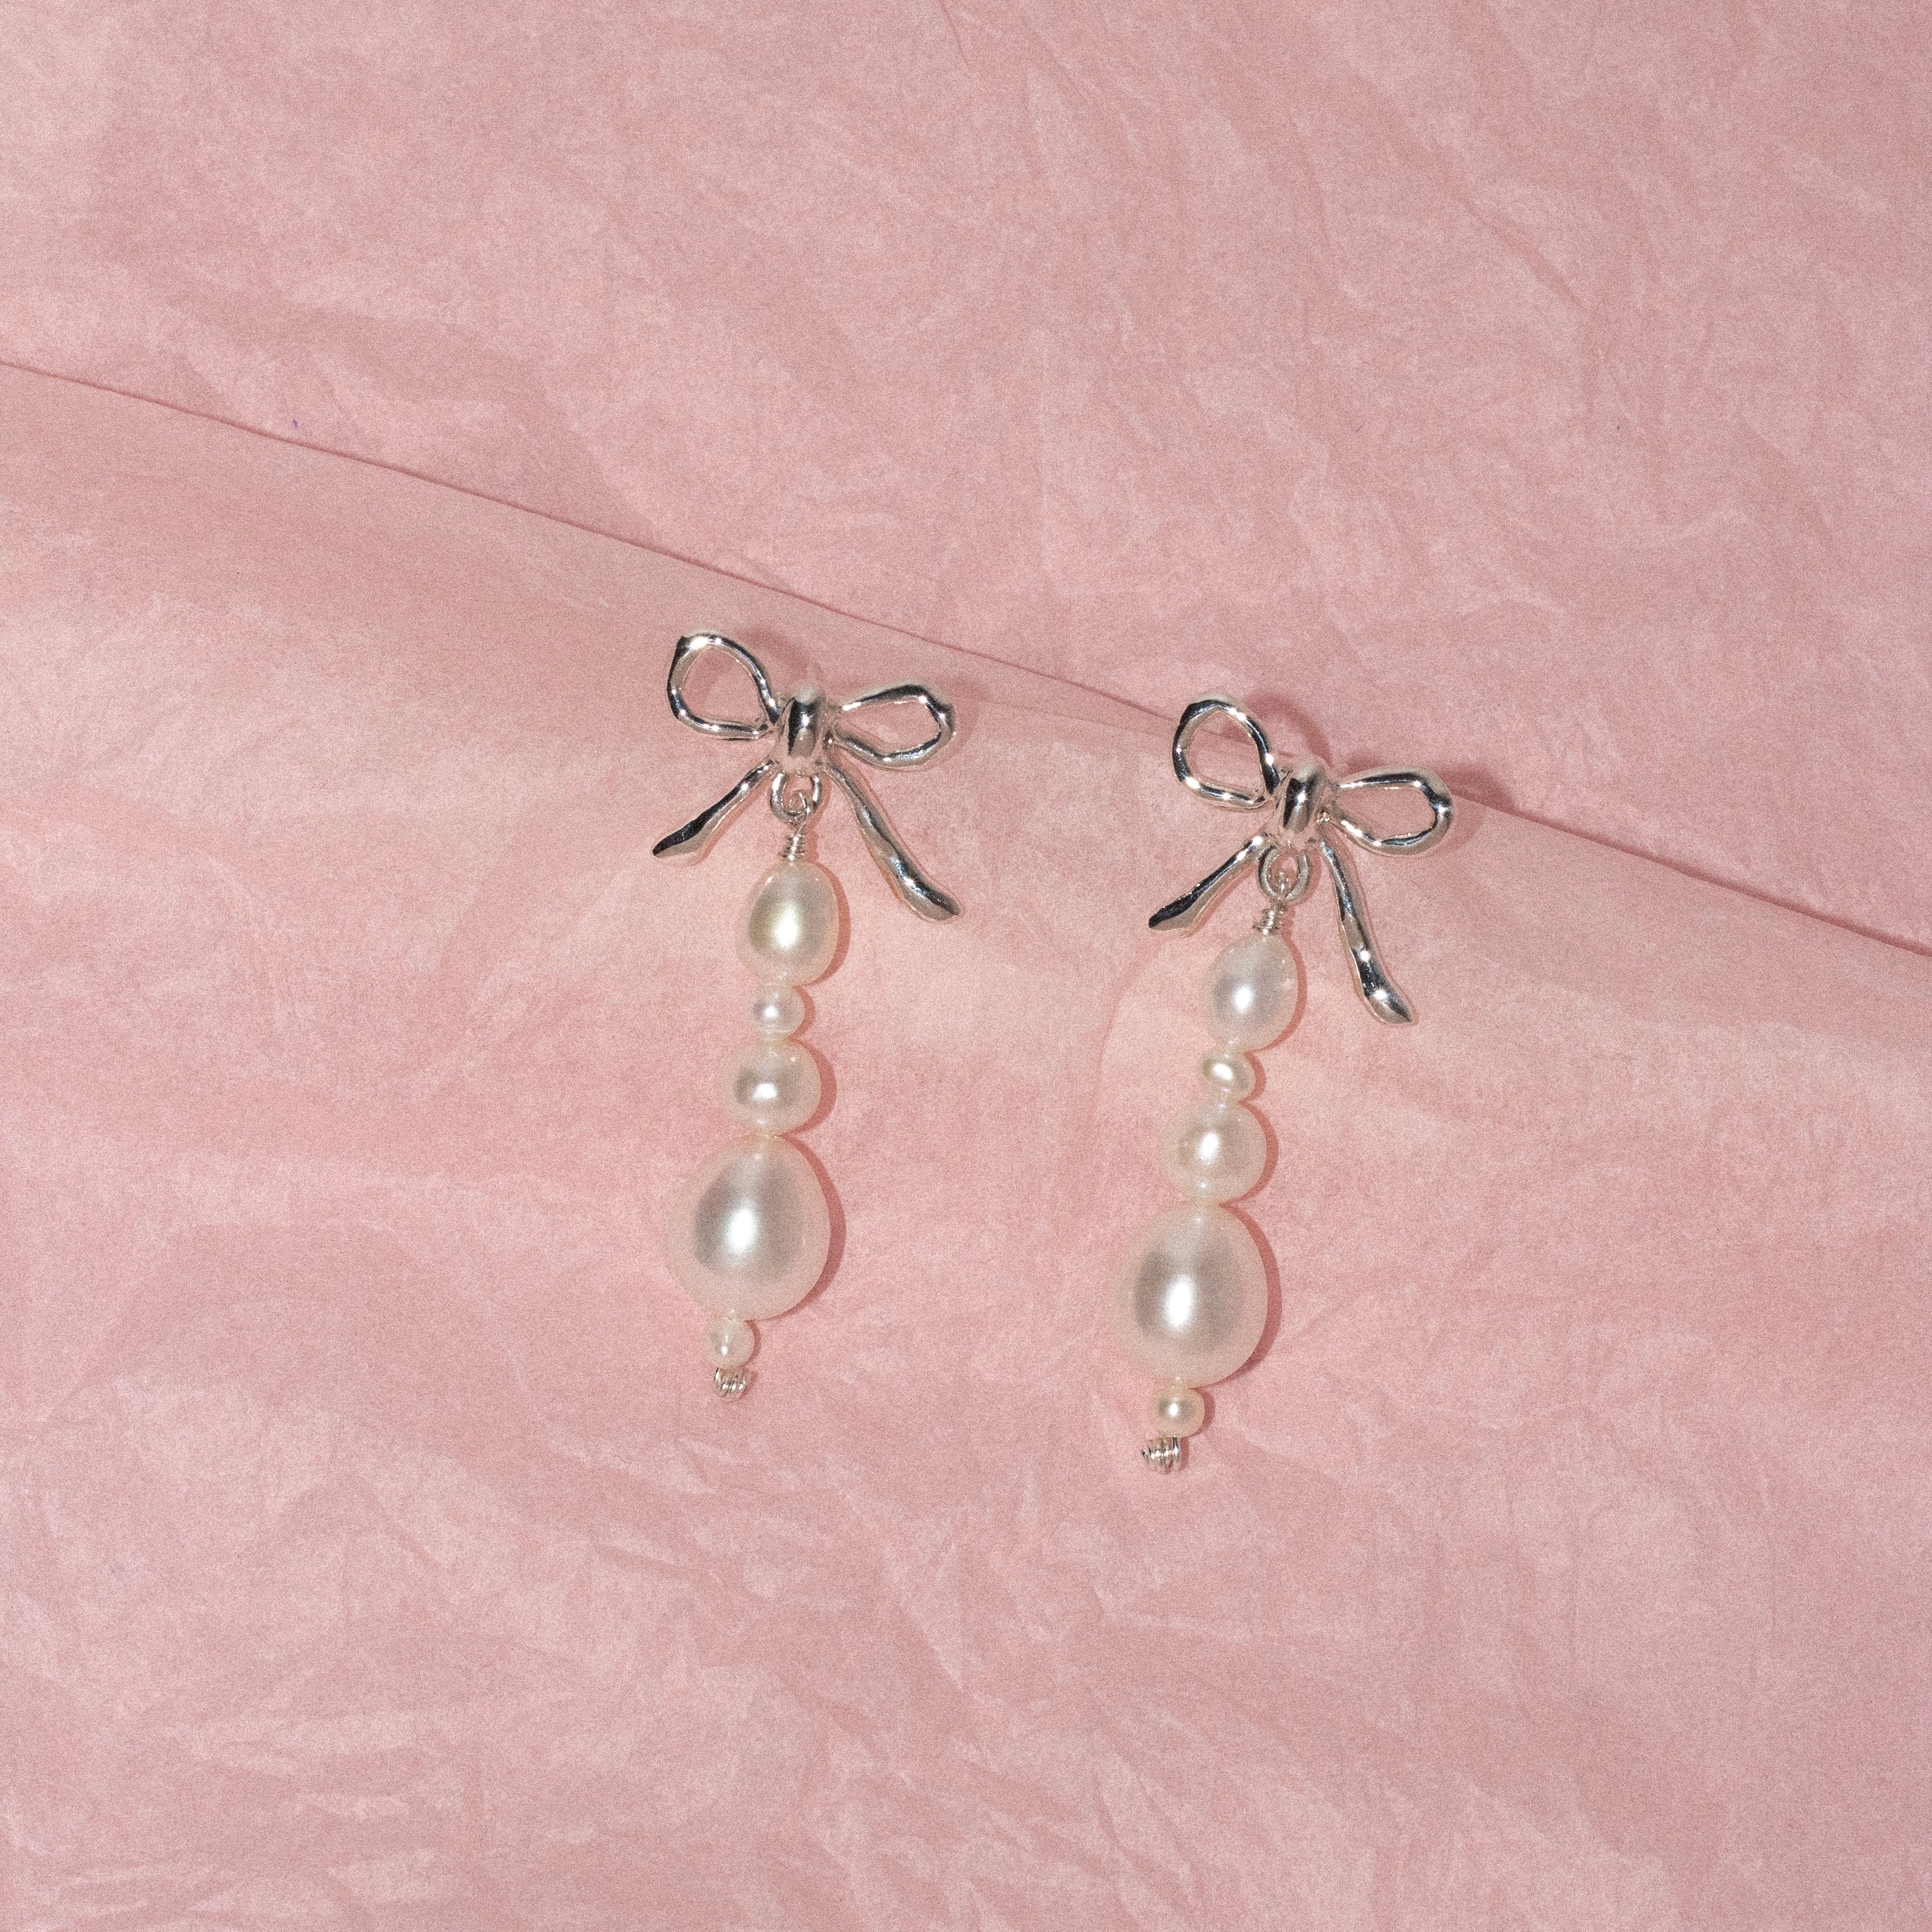 The Festoon Pearl Earrings